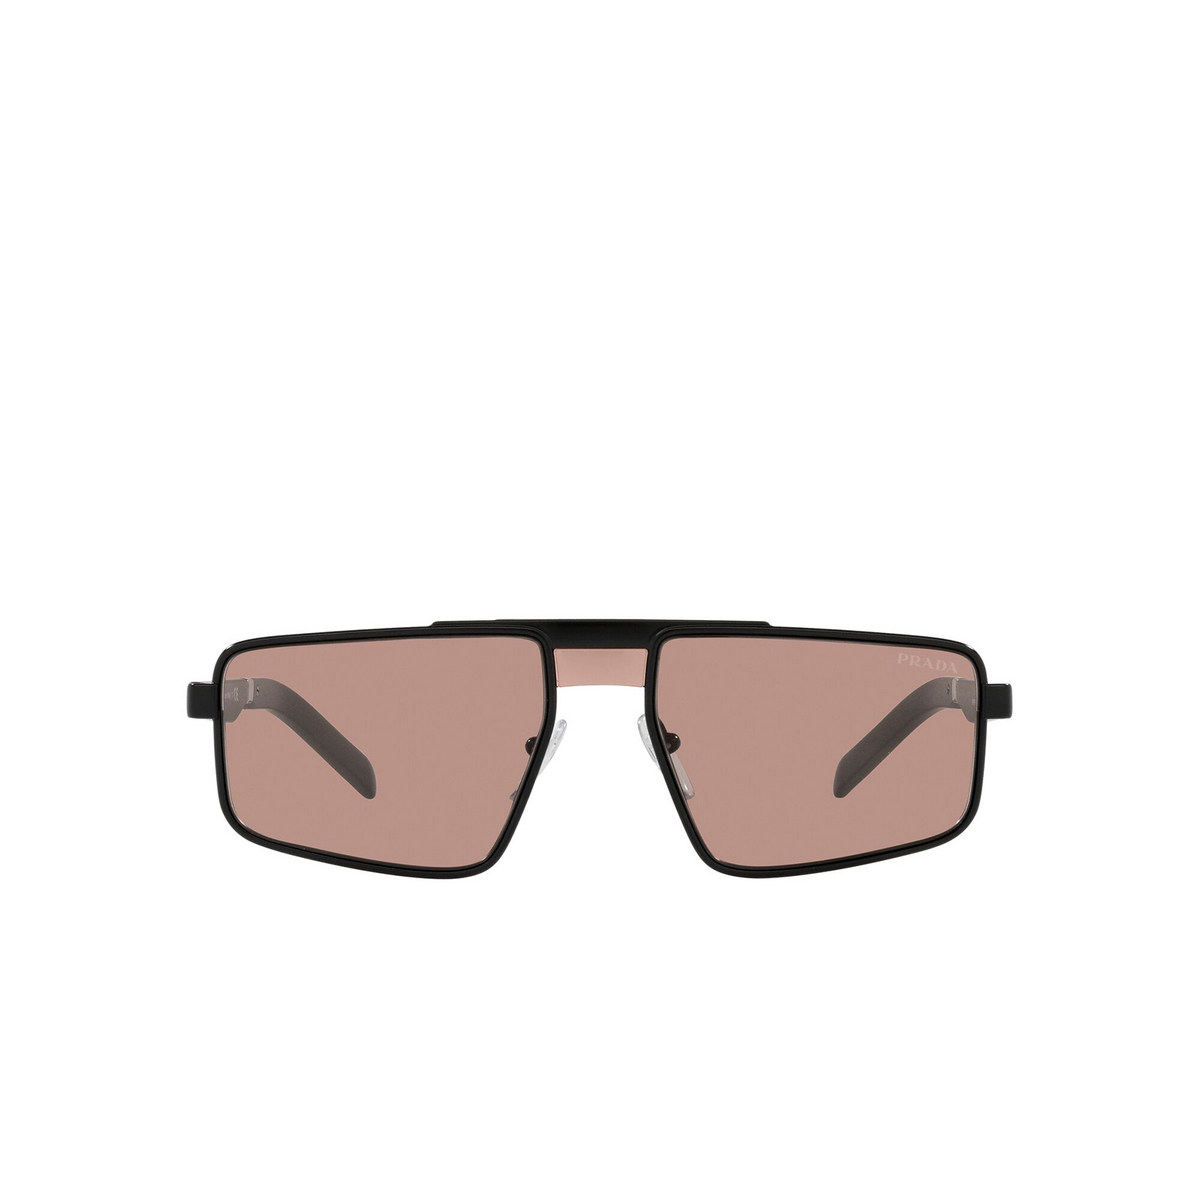 Prada® Irregular Sunglasses: PR 61WS color Matte Grey NAR08M - front view.